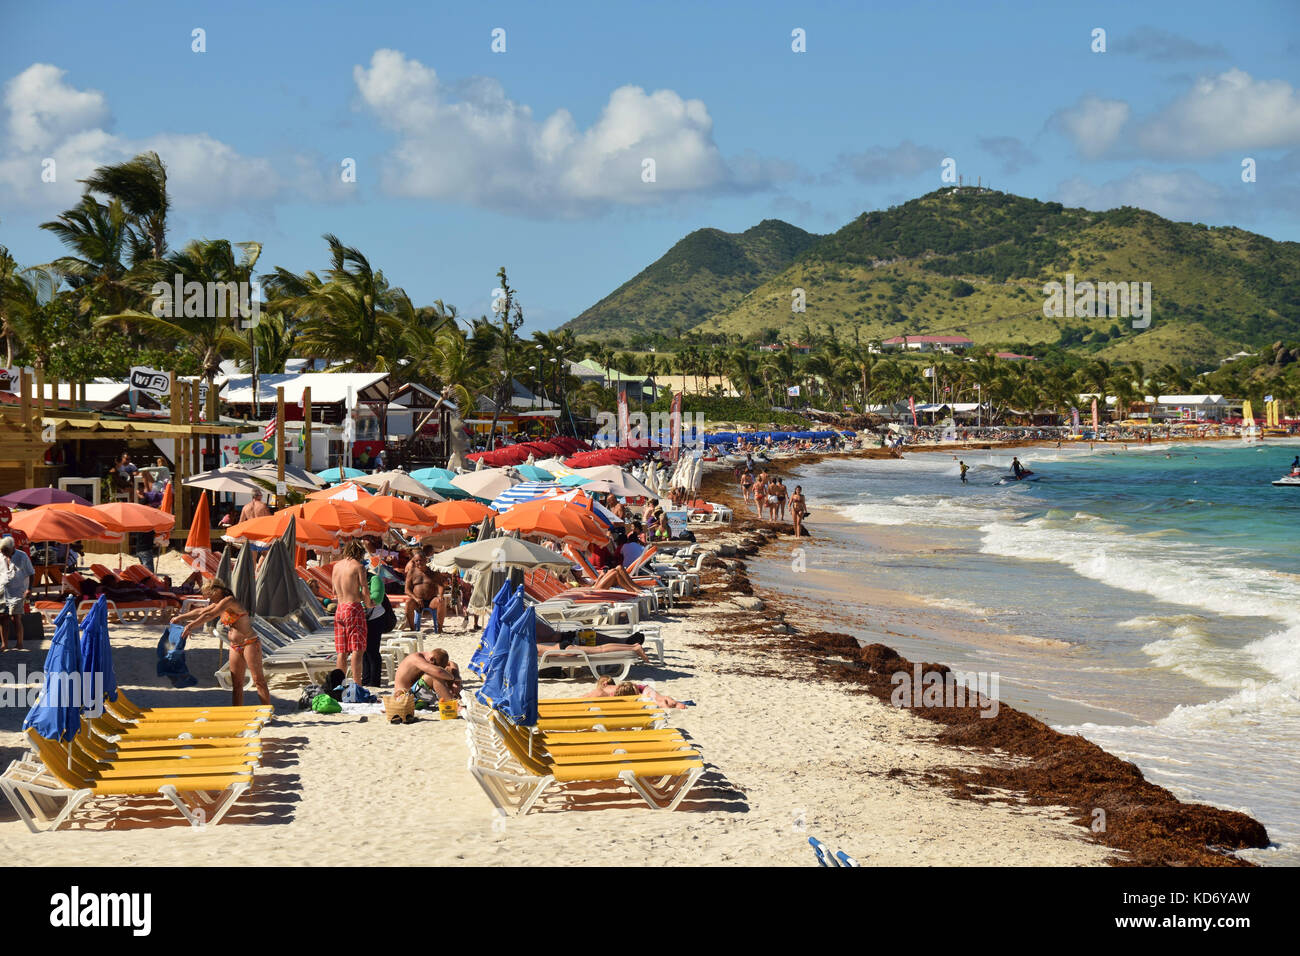 ORIENT BEACH - DECEMBER 24: Tourists enjoy a sunny day on world famous Orient Beach, Saint Maarten on December 24, 2014 Stock Photo